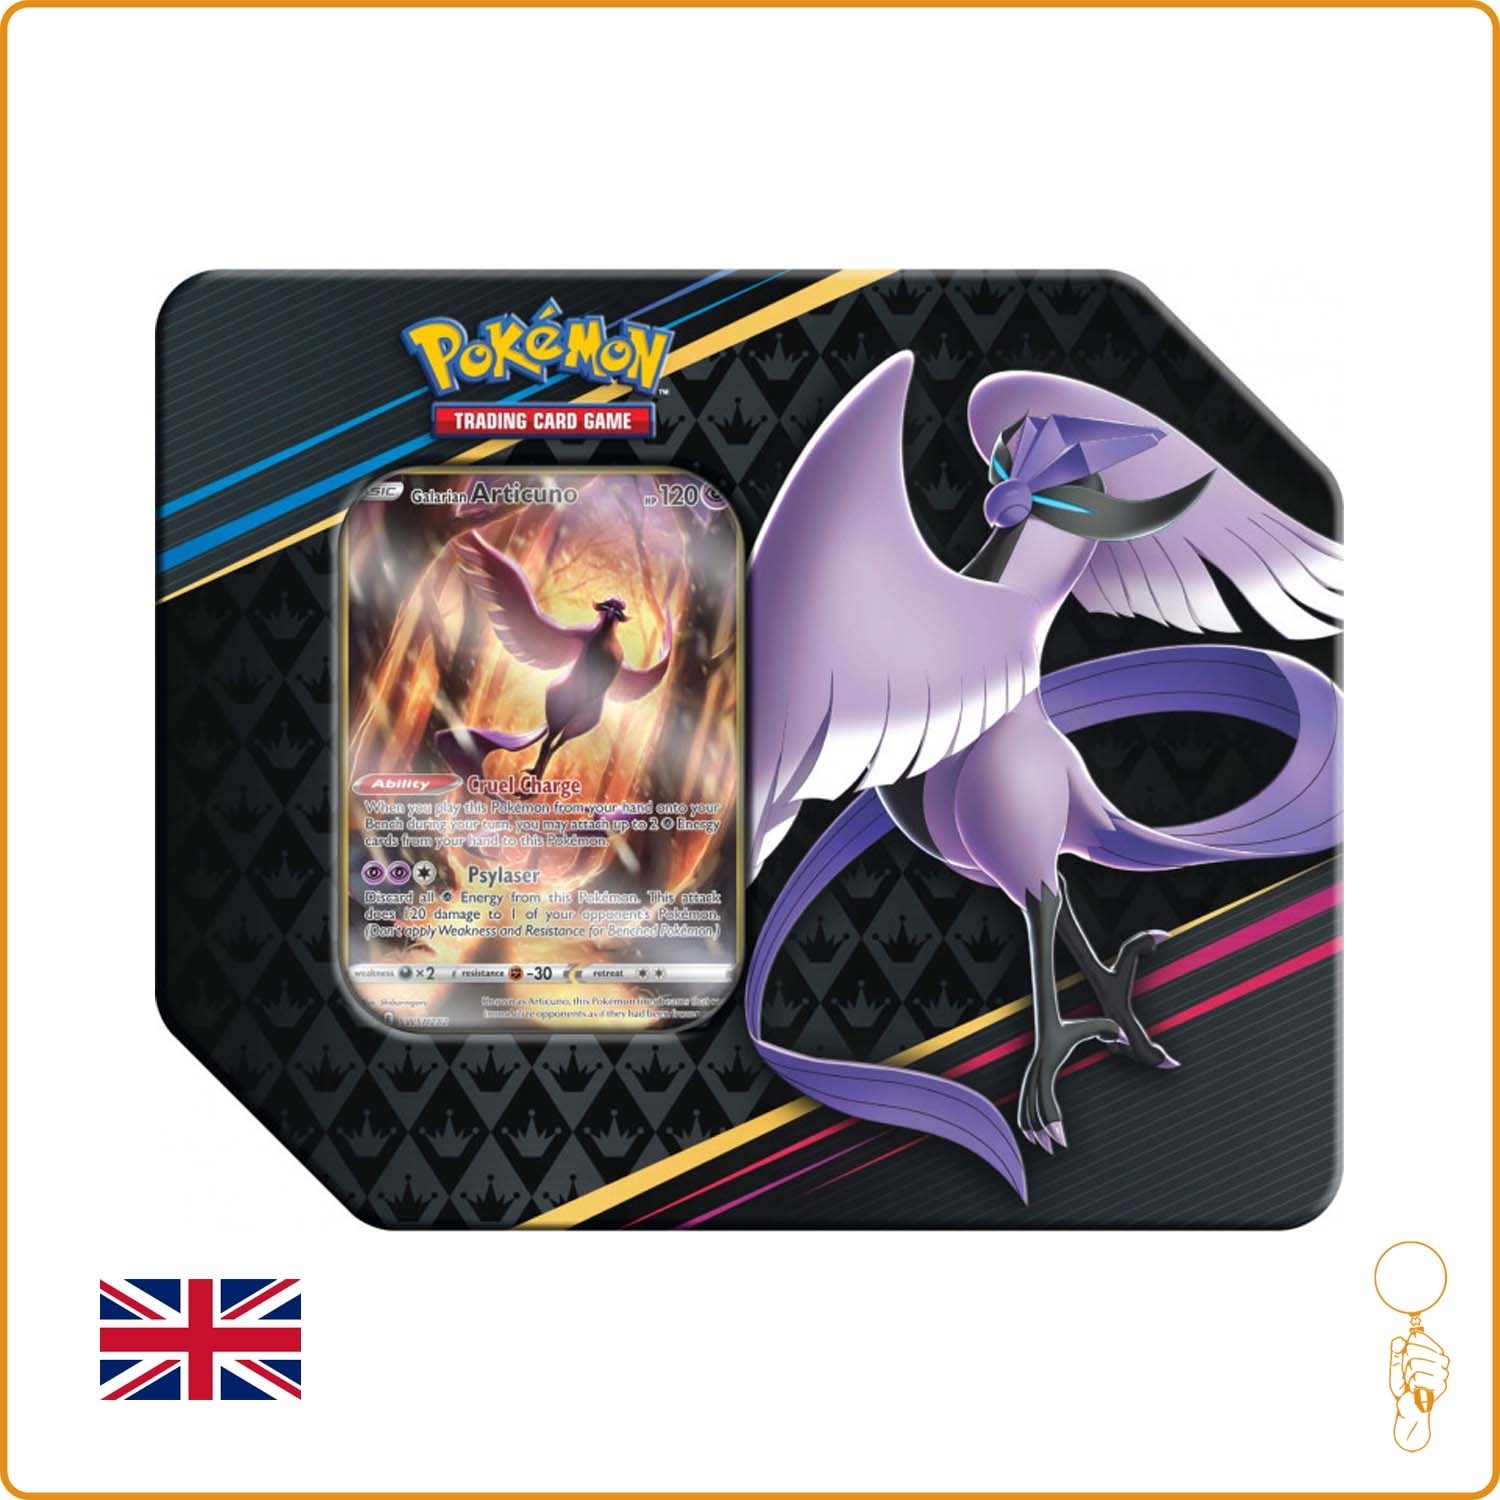 Pokébox - Pokemon - Zénith Suprême - EB12.5 - Artikodin de Galar - Scellé -  Anglais